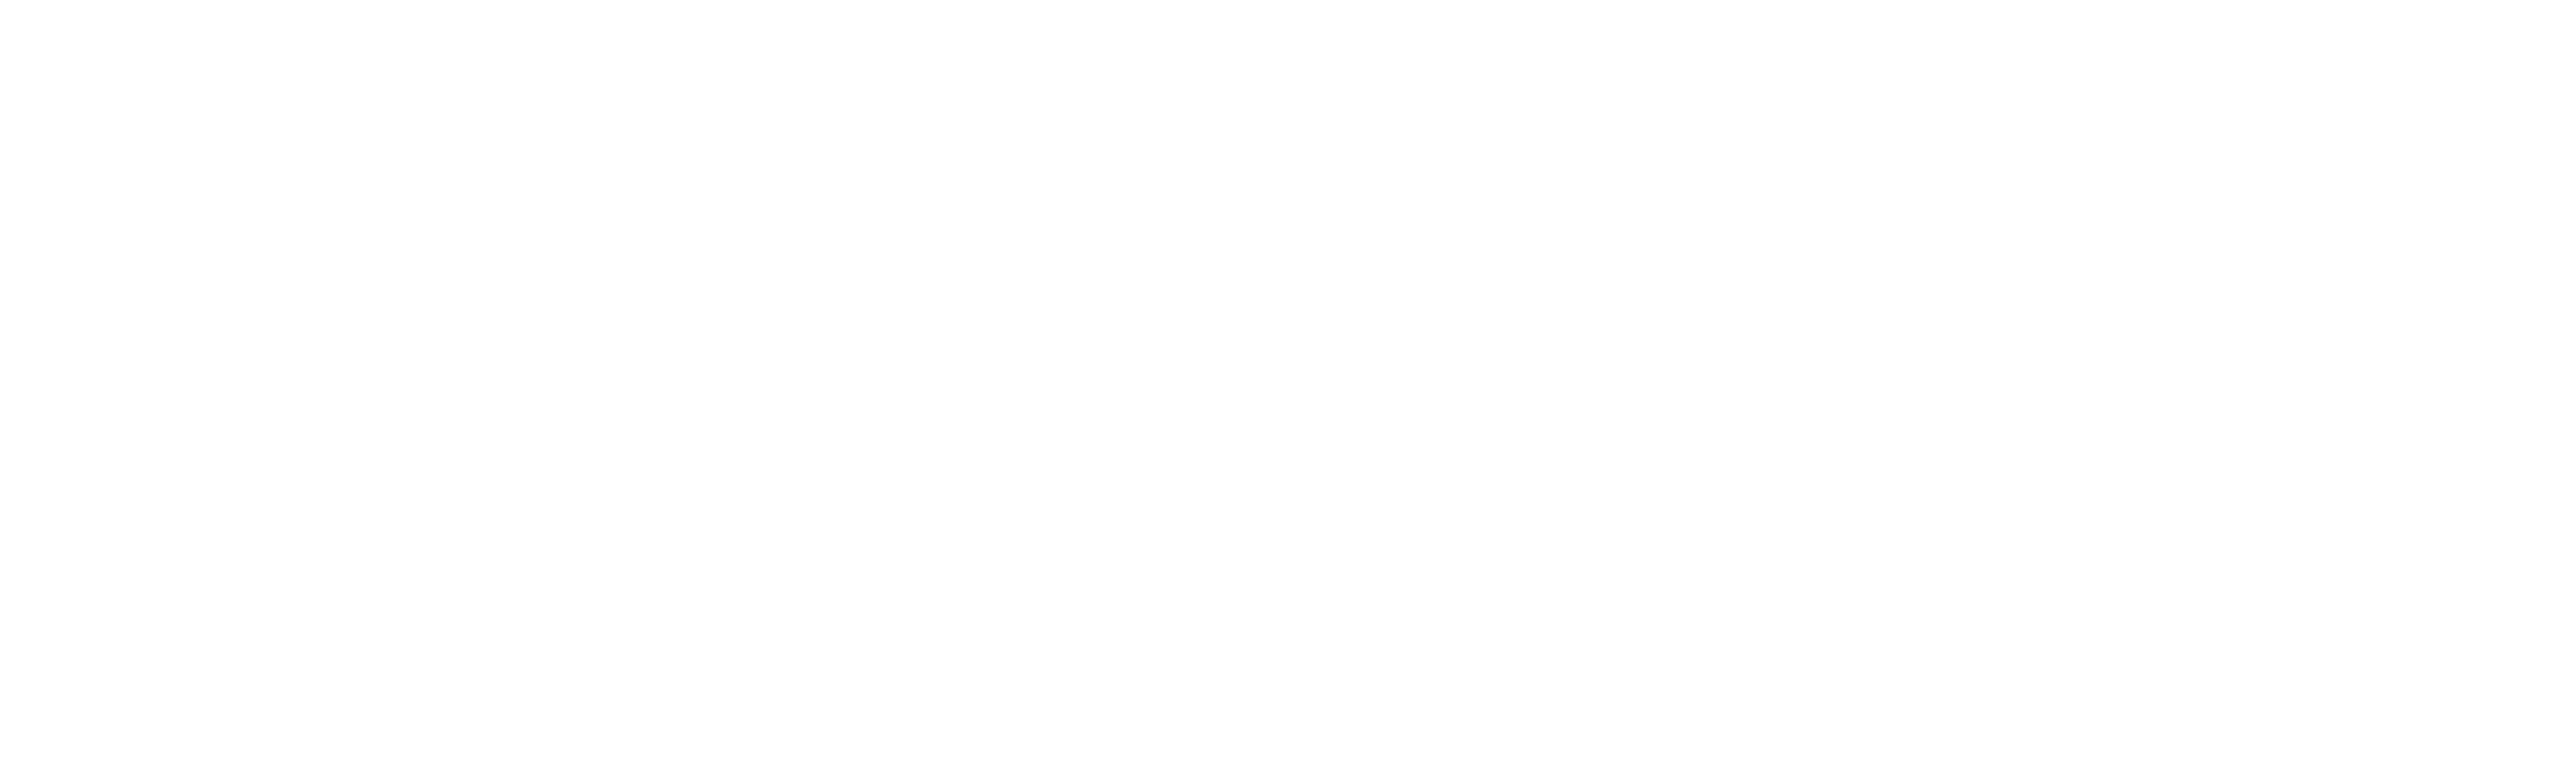 Miguel Angel Espino Gil